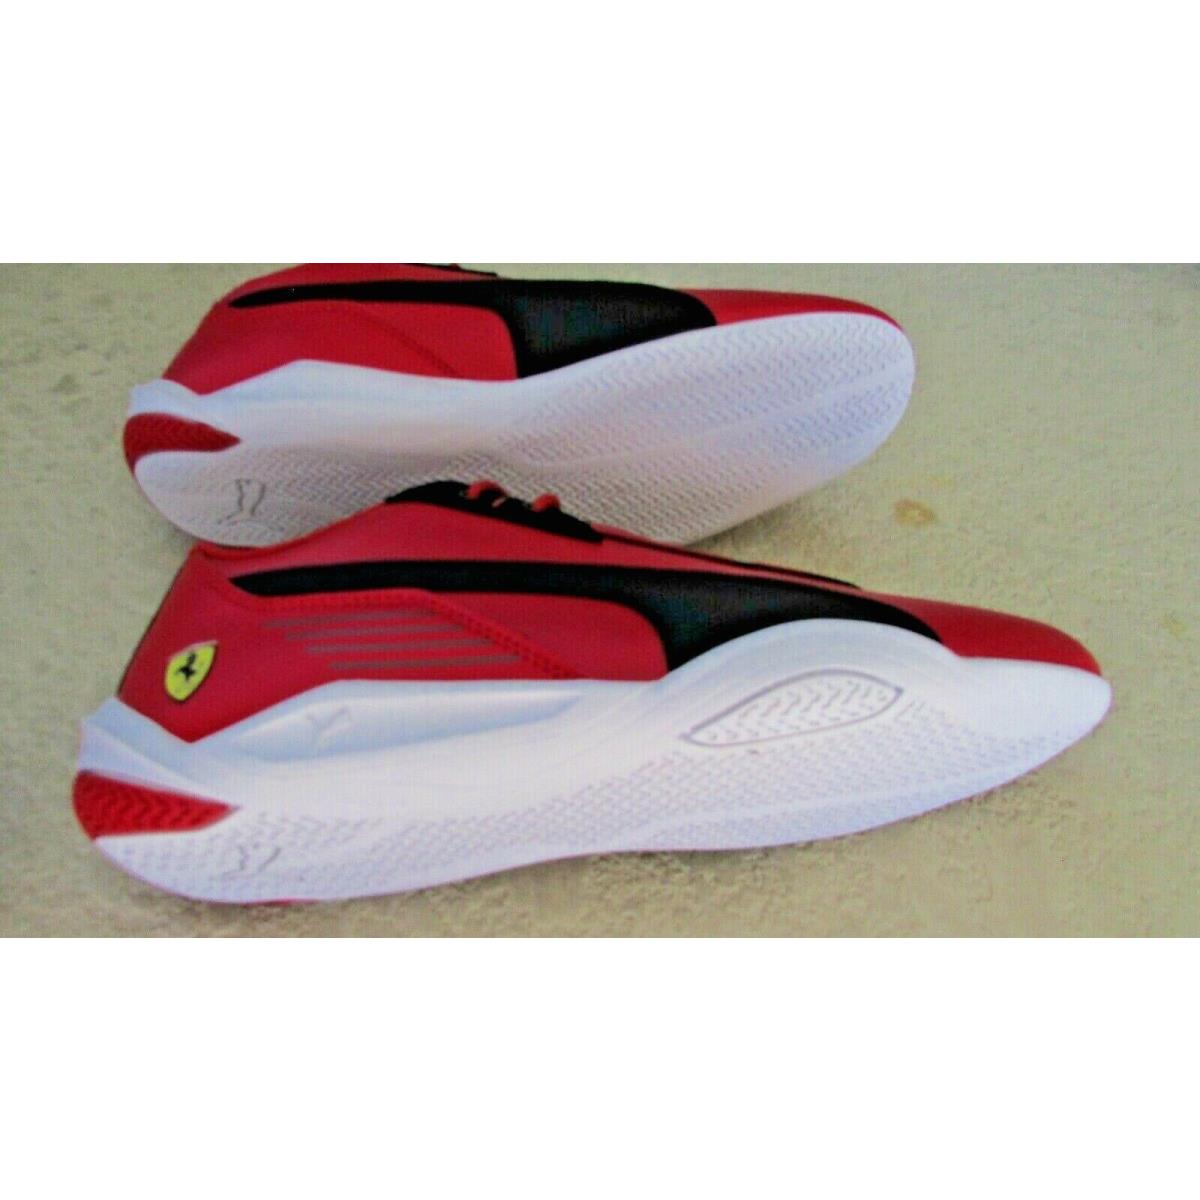 Puma shoes Driving Auto shoe - Ferrari Red 9